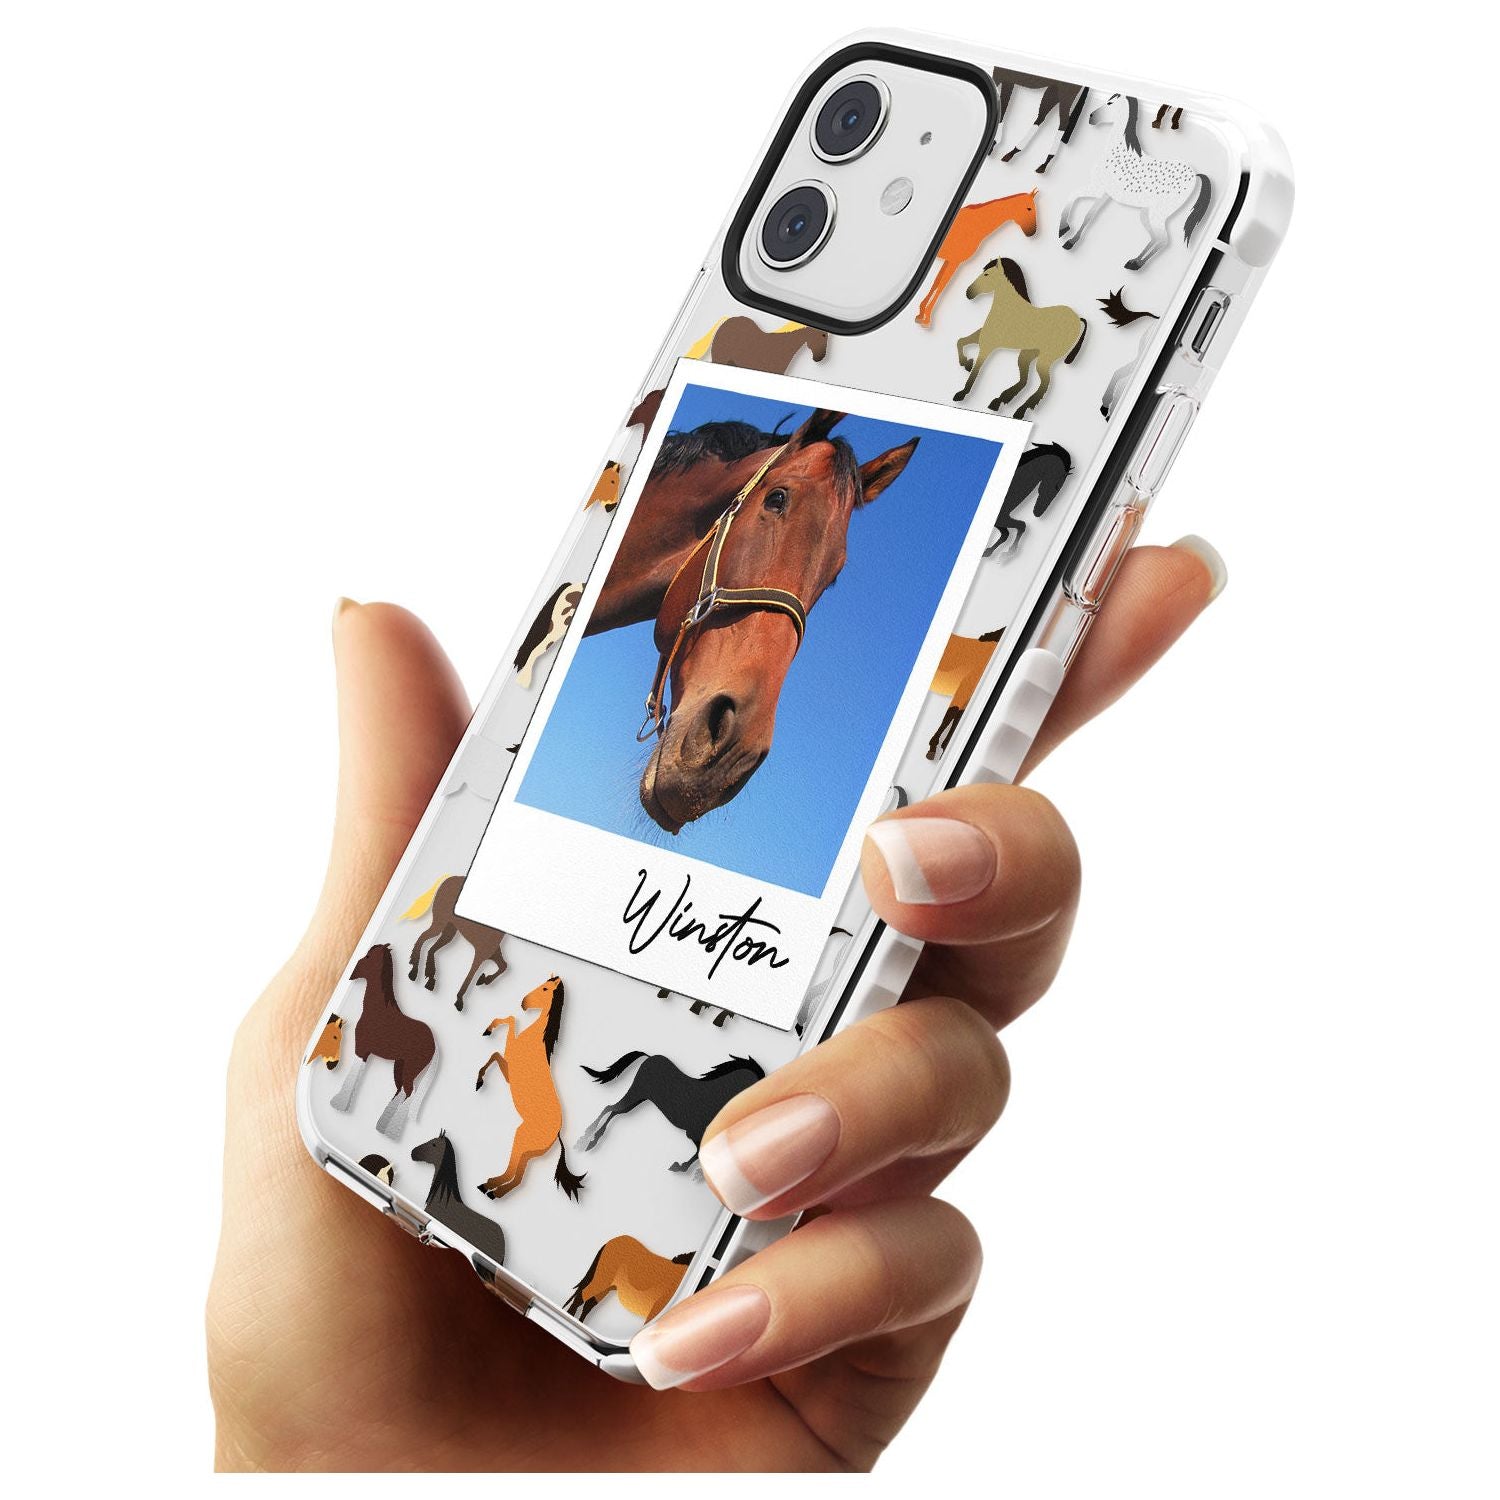 Personalised Horse Polaroid Impact Phone Case for iPhone 11